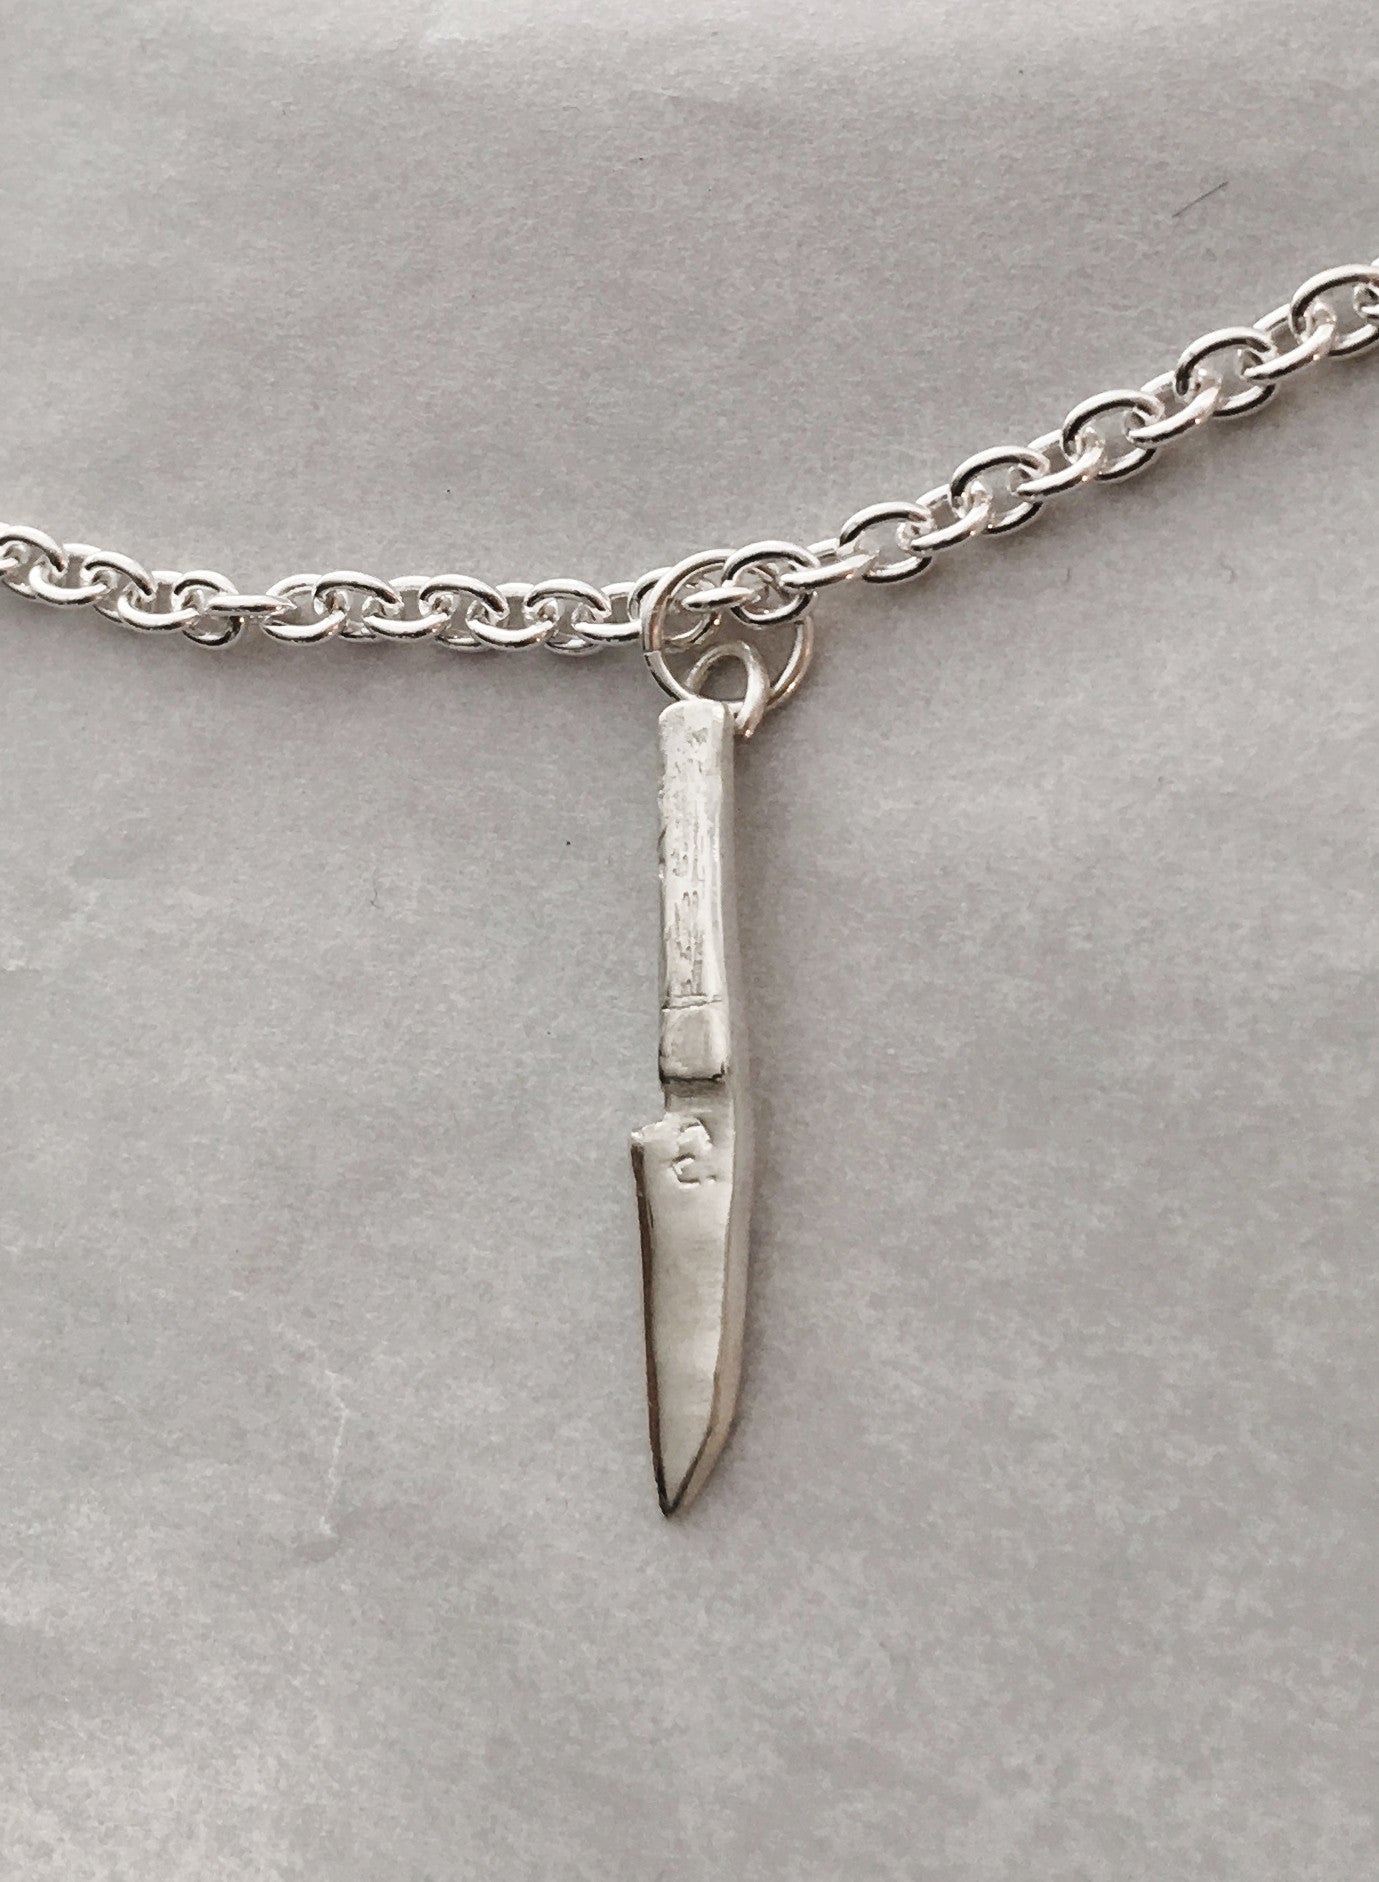 Silver Japanese Akita Inu engraved necklace - MEJK Jewellery